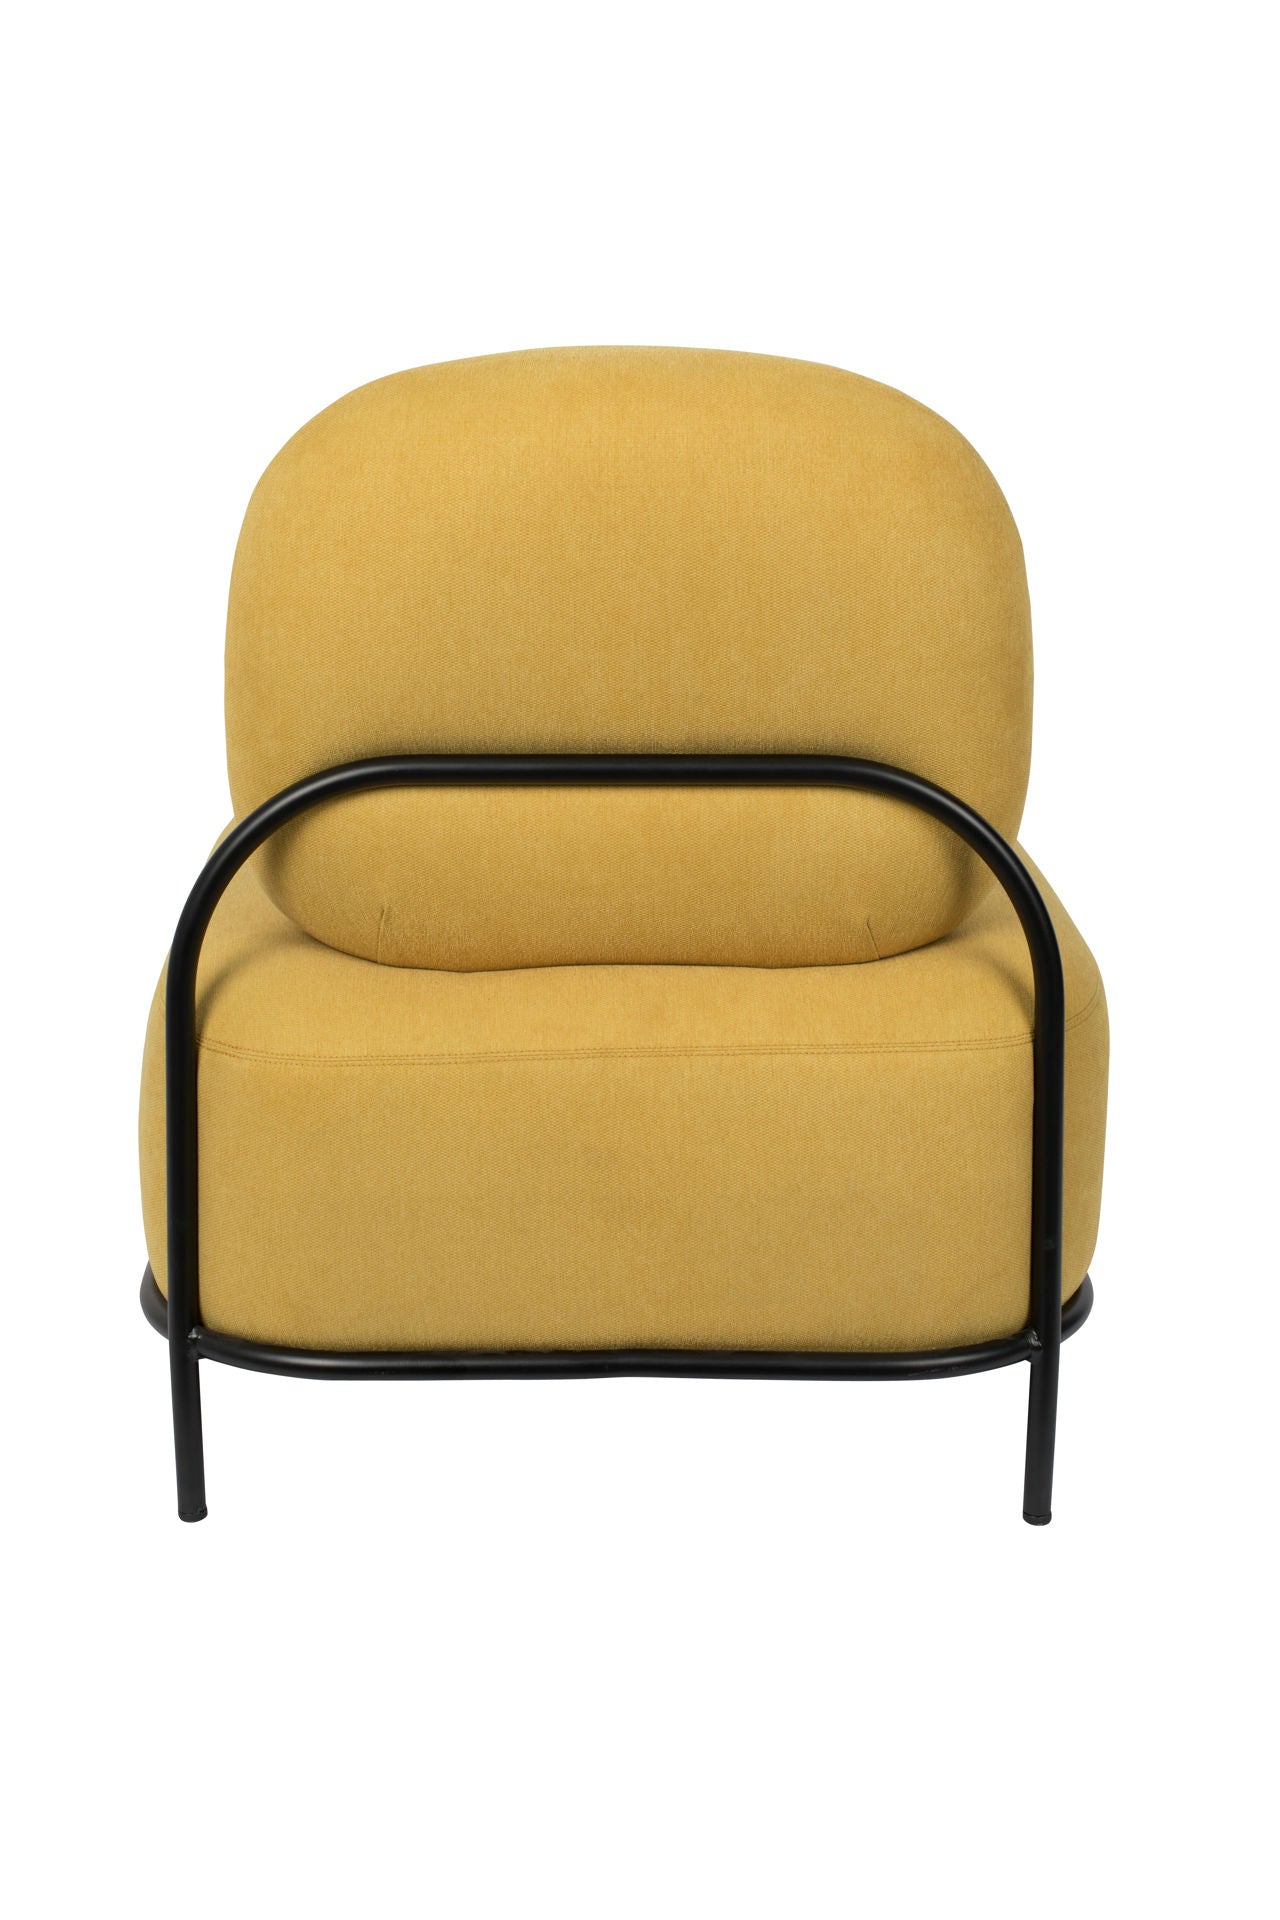 Nancy's Valencia West Lounge Chair - Moderne - Jaune - Polyester, Contreplaqué, Fer - 71,5 cm x 66 cm x 77 cm